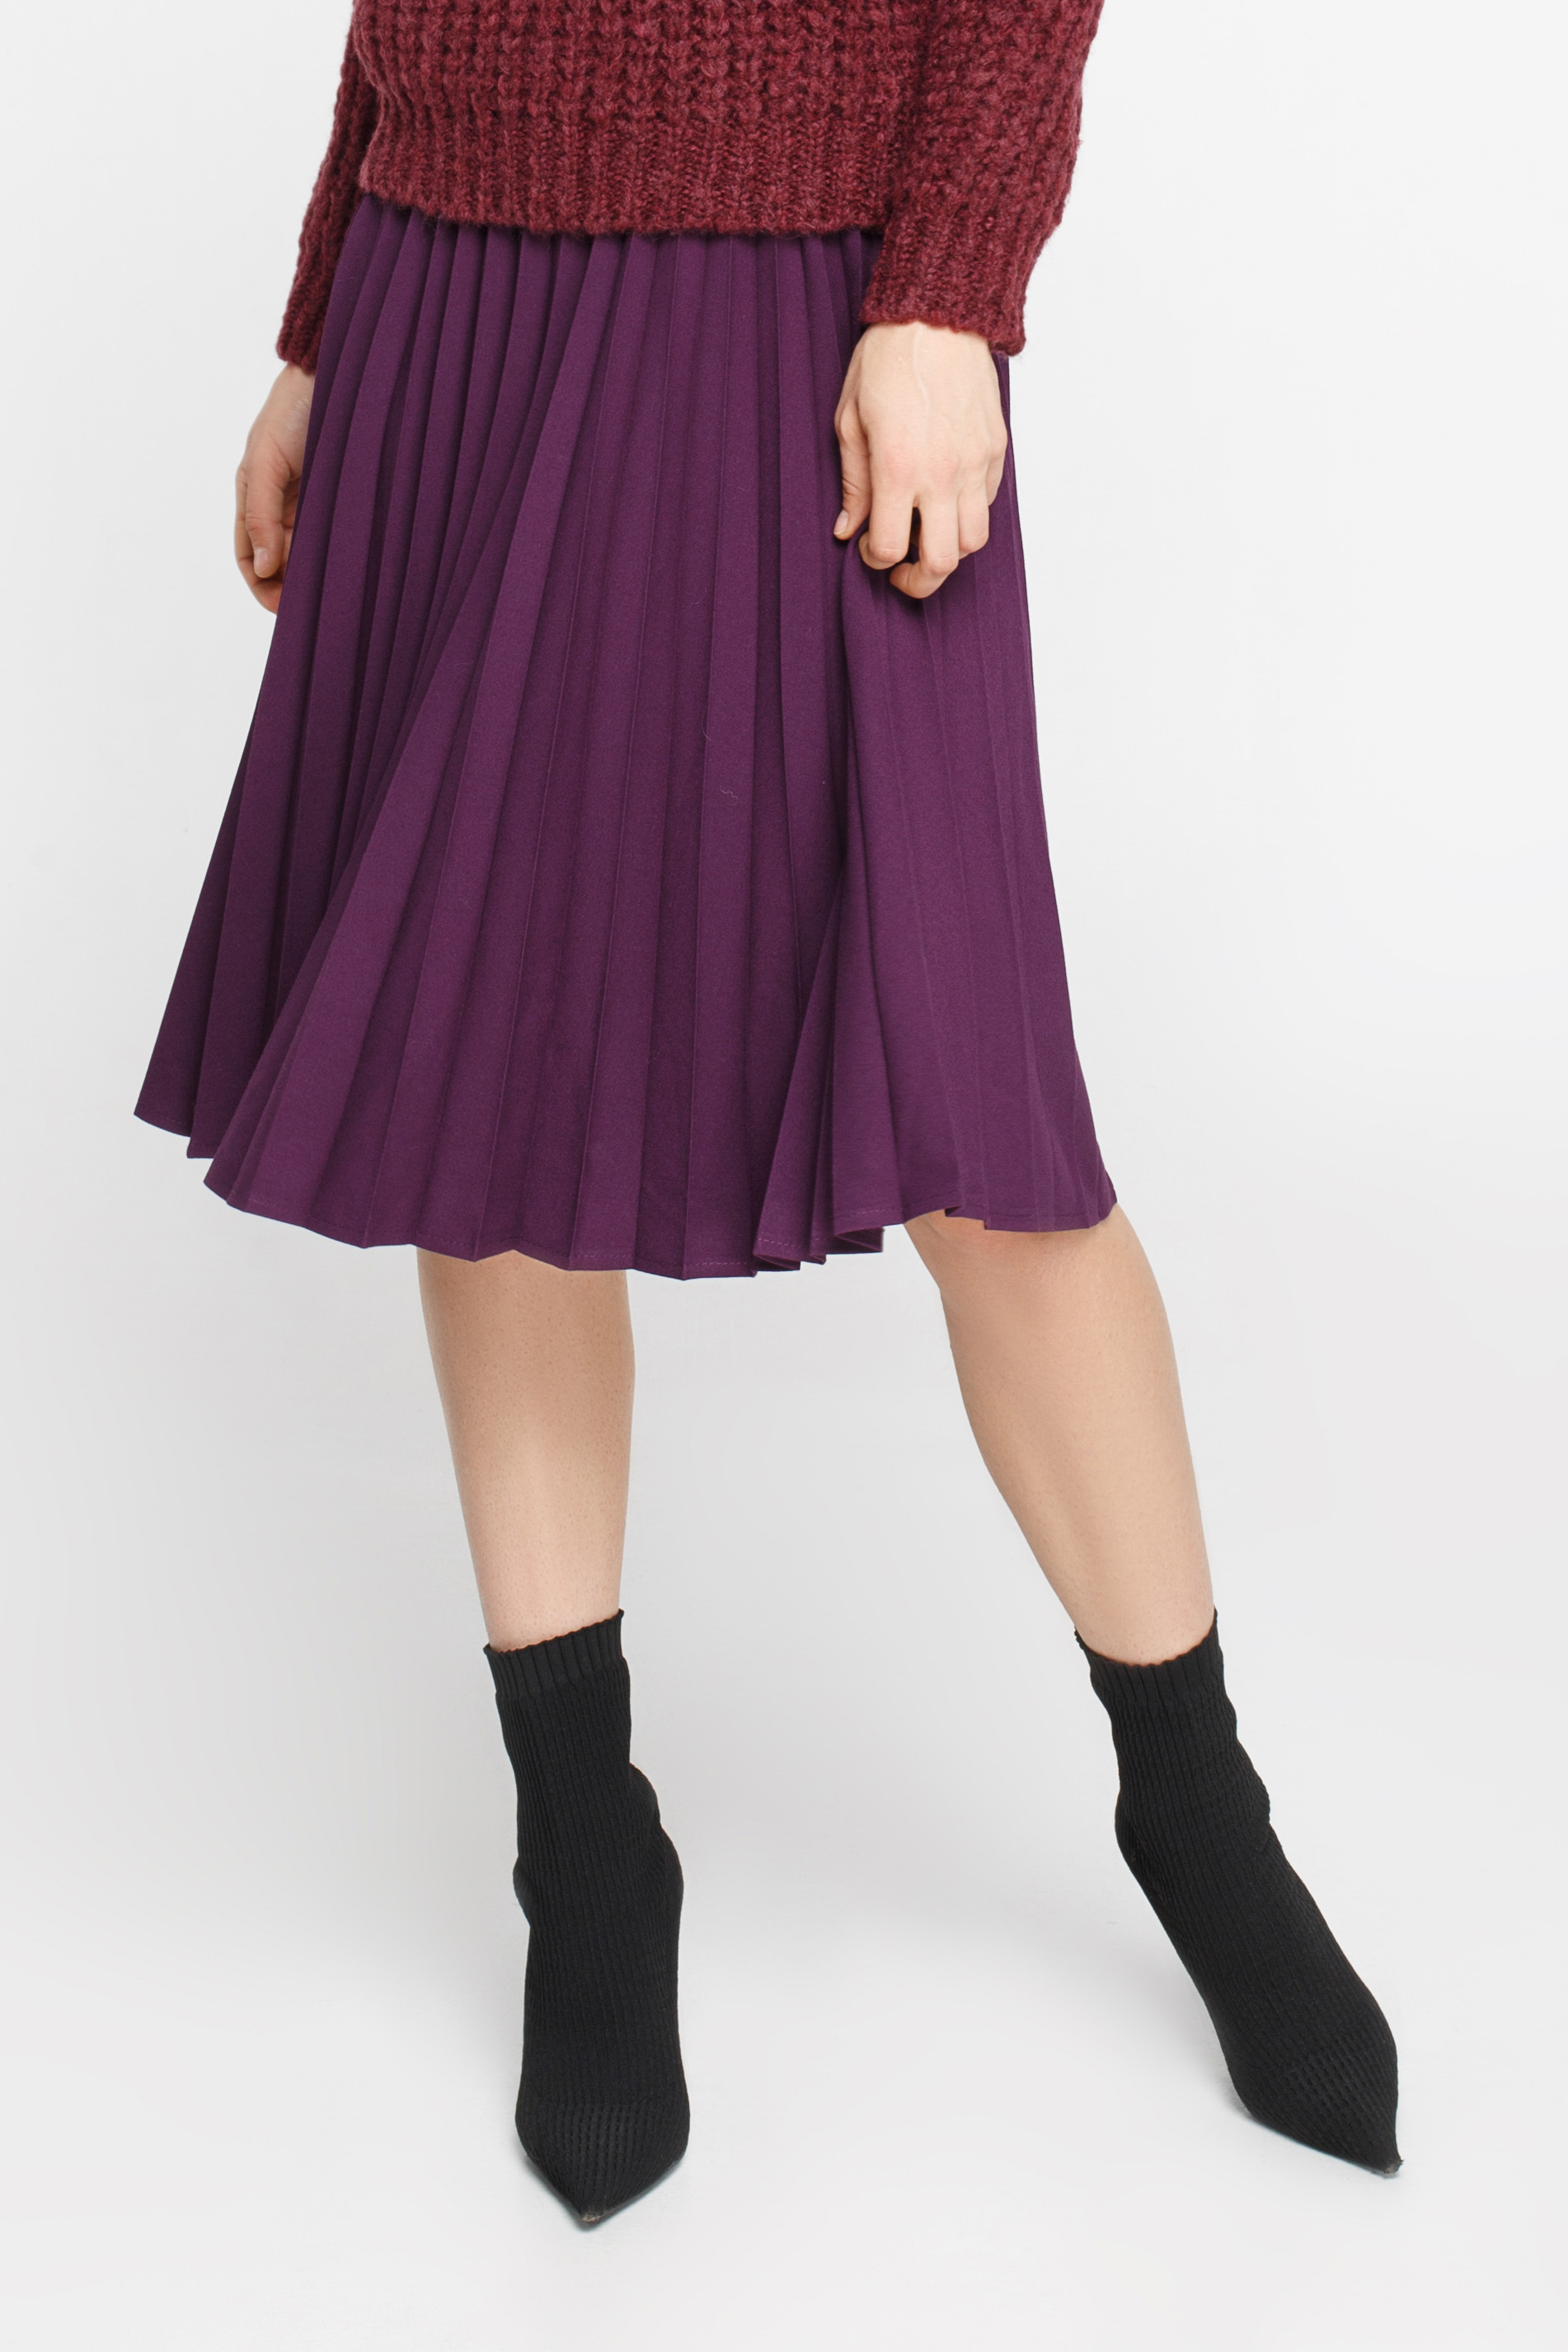 Purple pleated skirt below the knee, photo 1